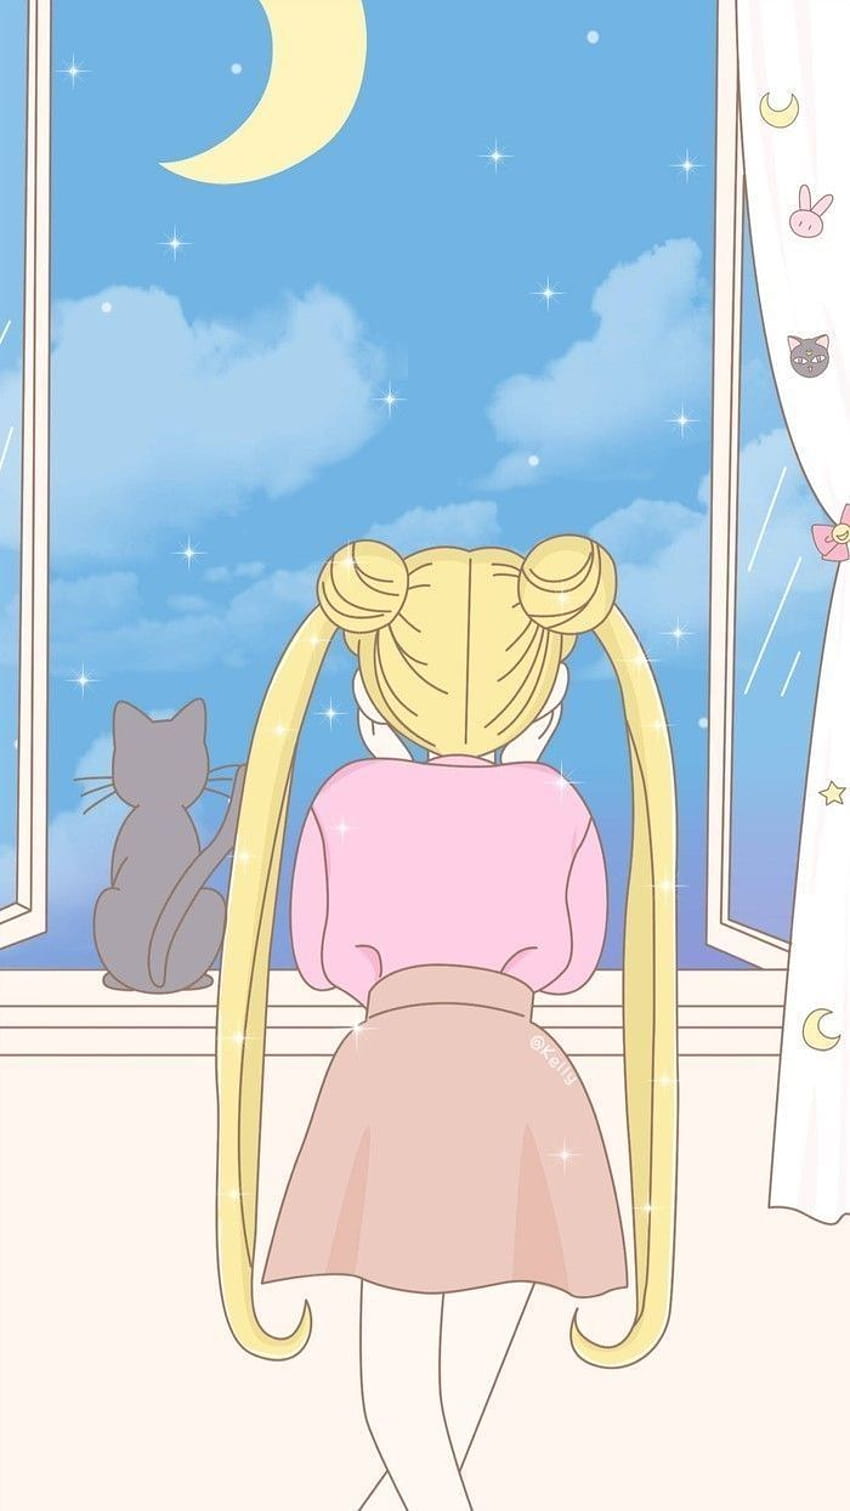 Sailor Moon Crystal Season 4 All Senshi Wallpaper by  xuweisen.deviantart.com on @DeviantArt